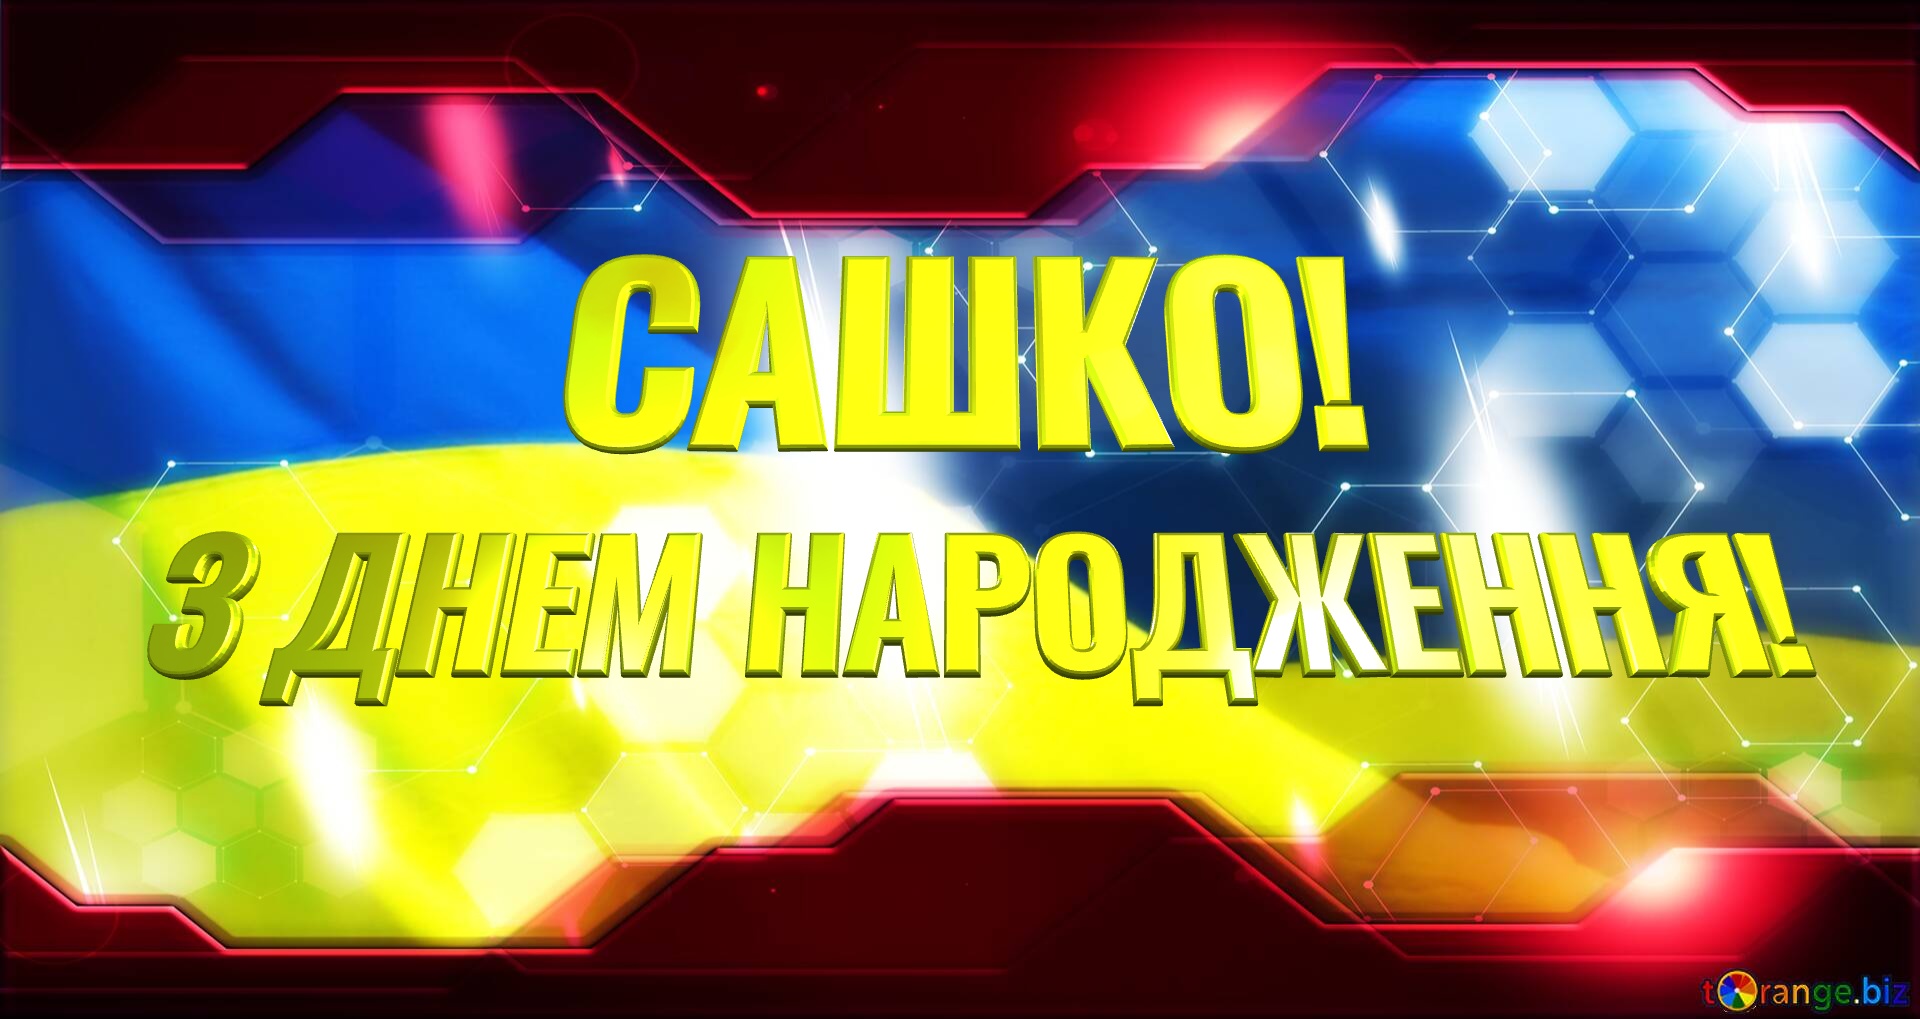 САШКО! З ДНЕМ НАРОДЖЕННЯ!  Ukraine android phone background Ukrainian desktop №0